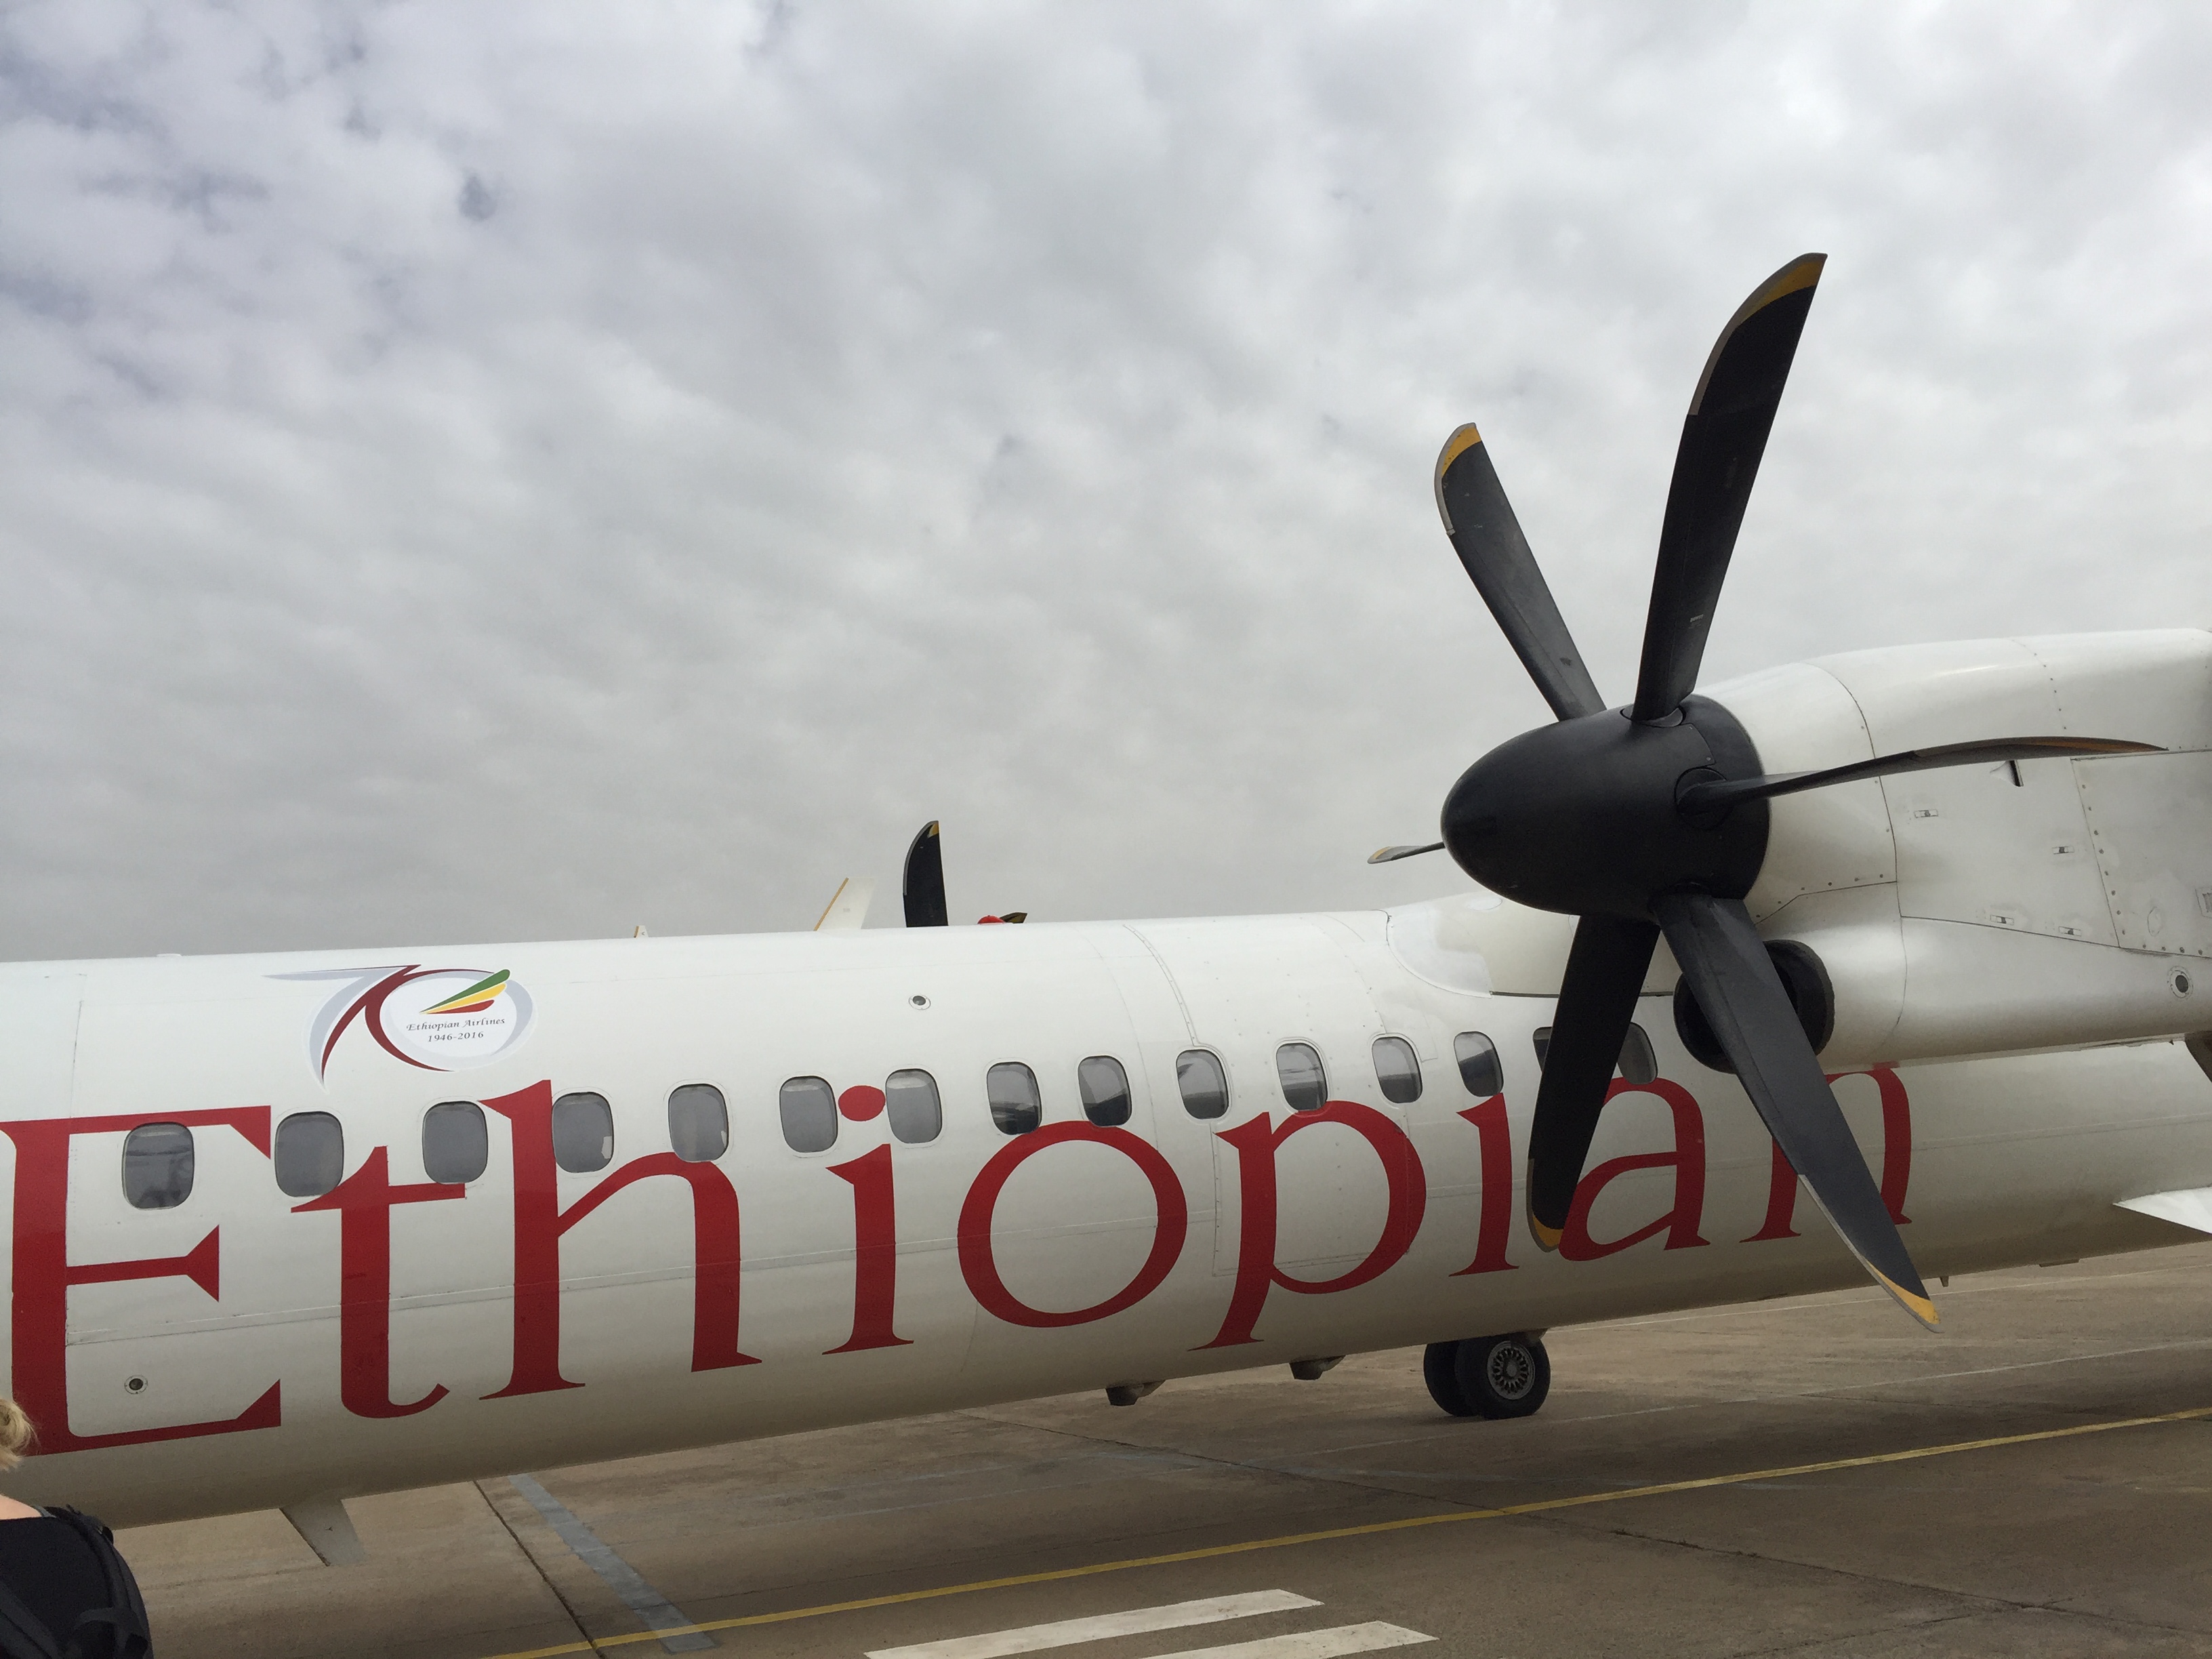 Pre-Departure- Ethiopia!